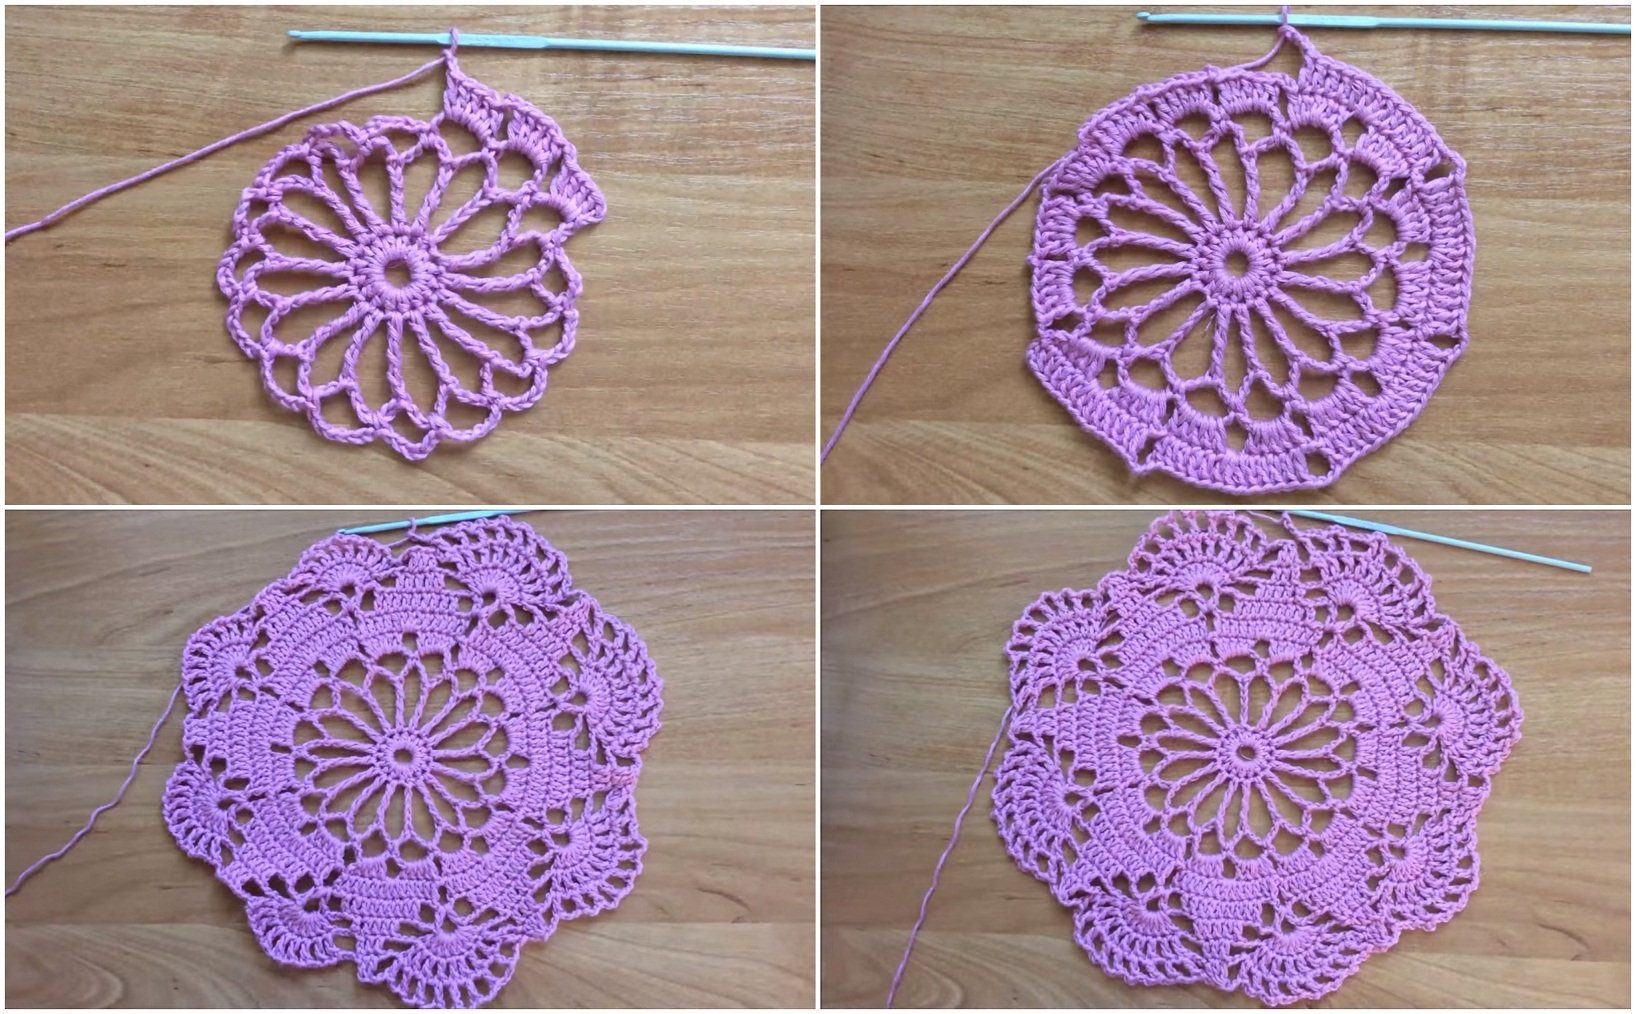 Beginner Crochet Patterns Free Easy To Make Doily Free Crochet Pattern Yarn Hooks